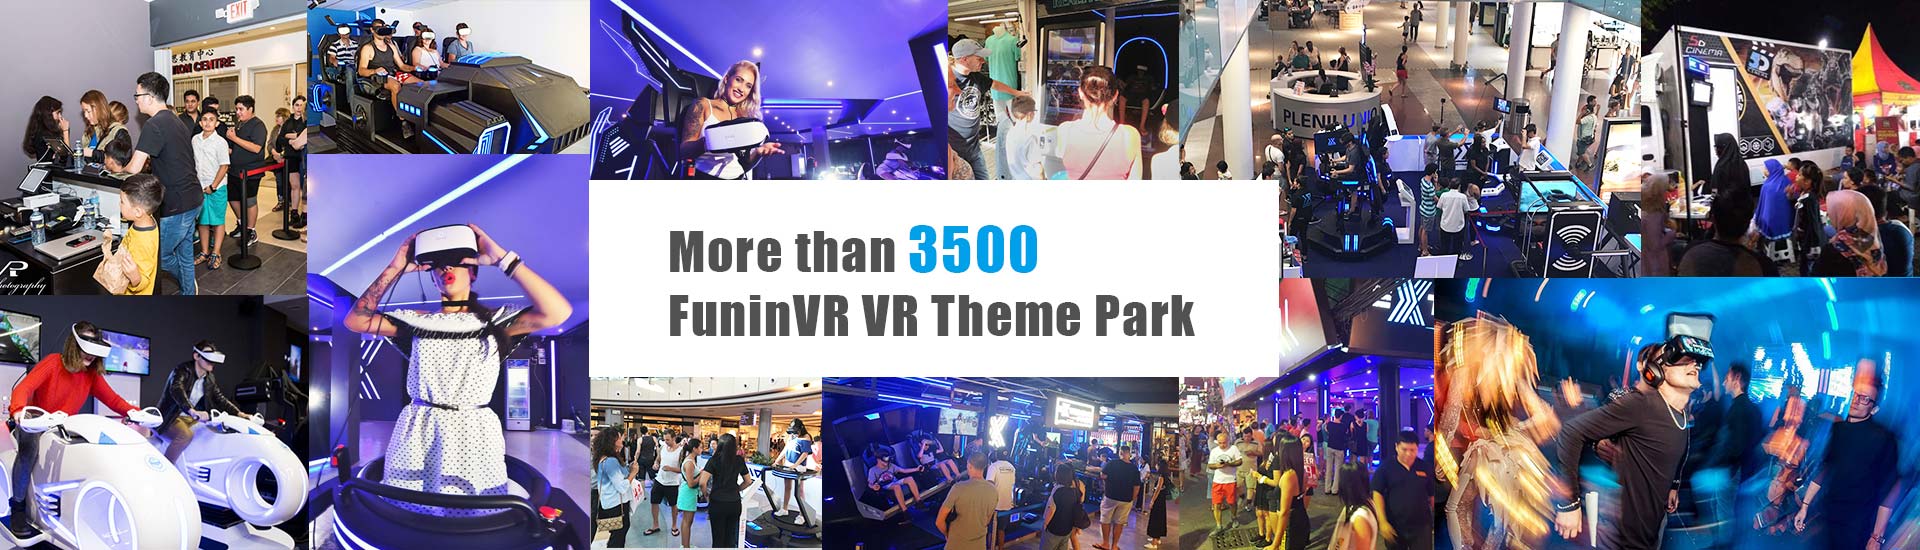 Indoor Virtual Reality Game Zone In Vietnam